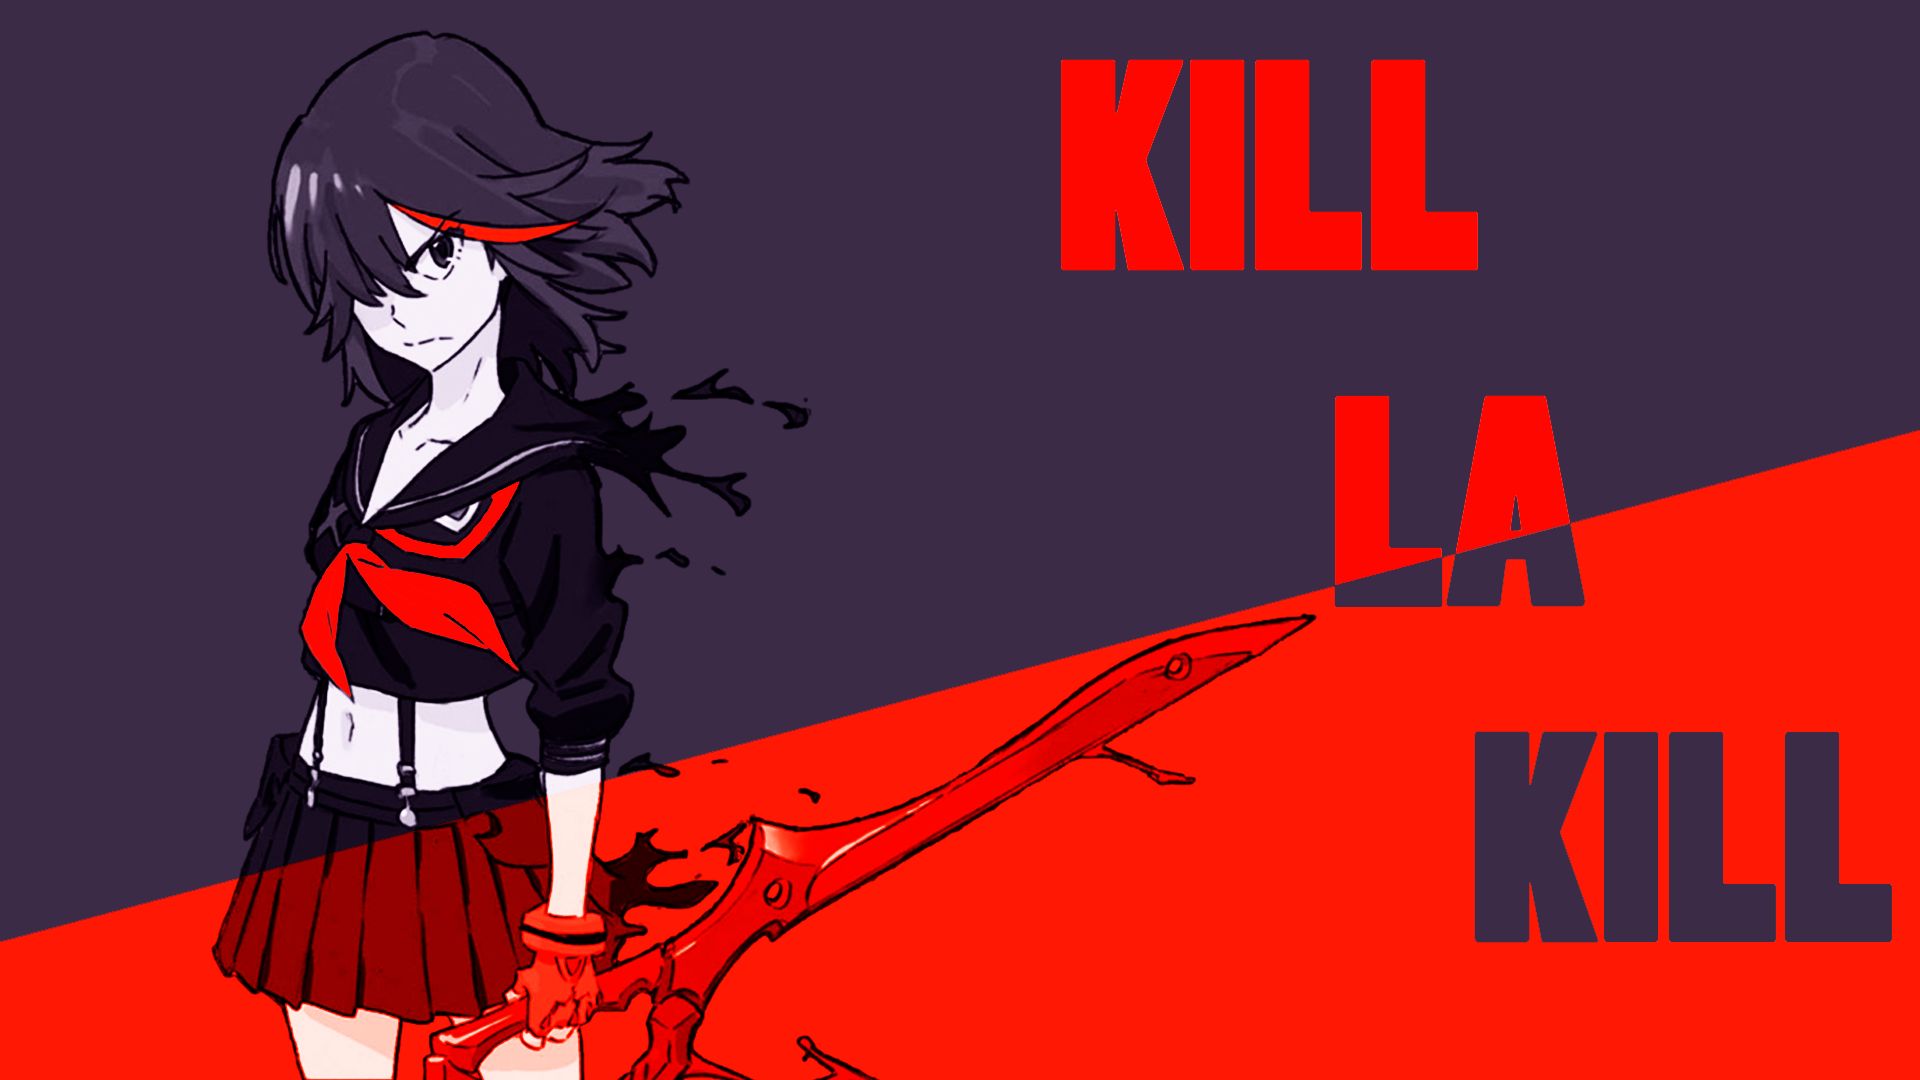 628642 Hintergrundbild herunterladen animes, kiru ra kiru: kill la kill - Bildschirmschoner und Bilder kostenlos